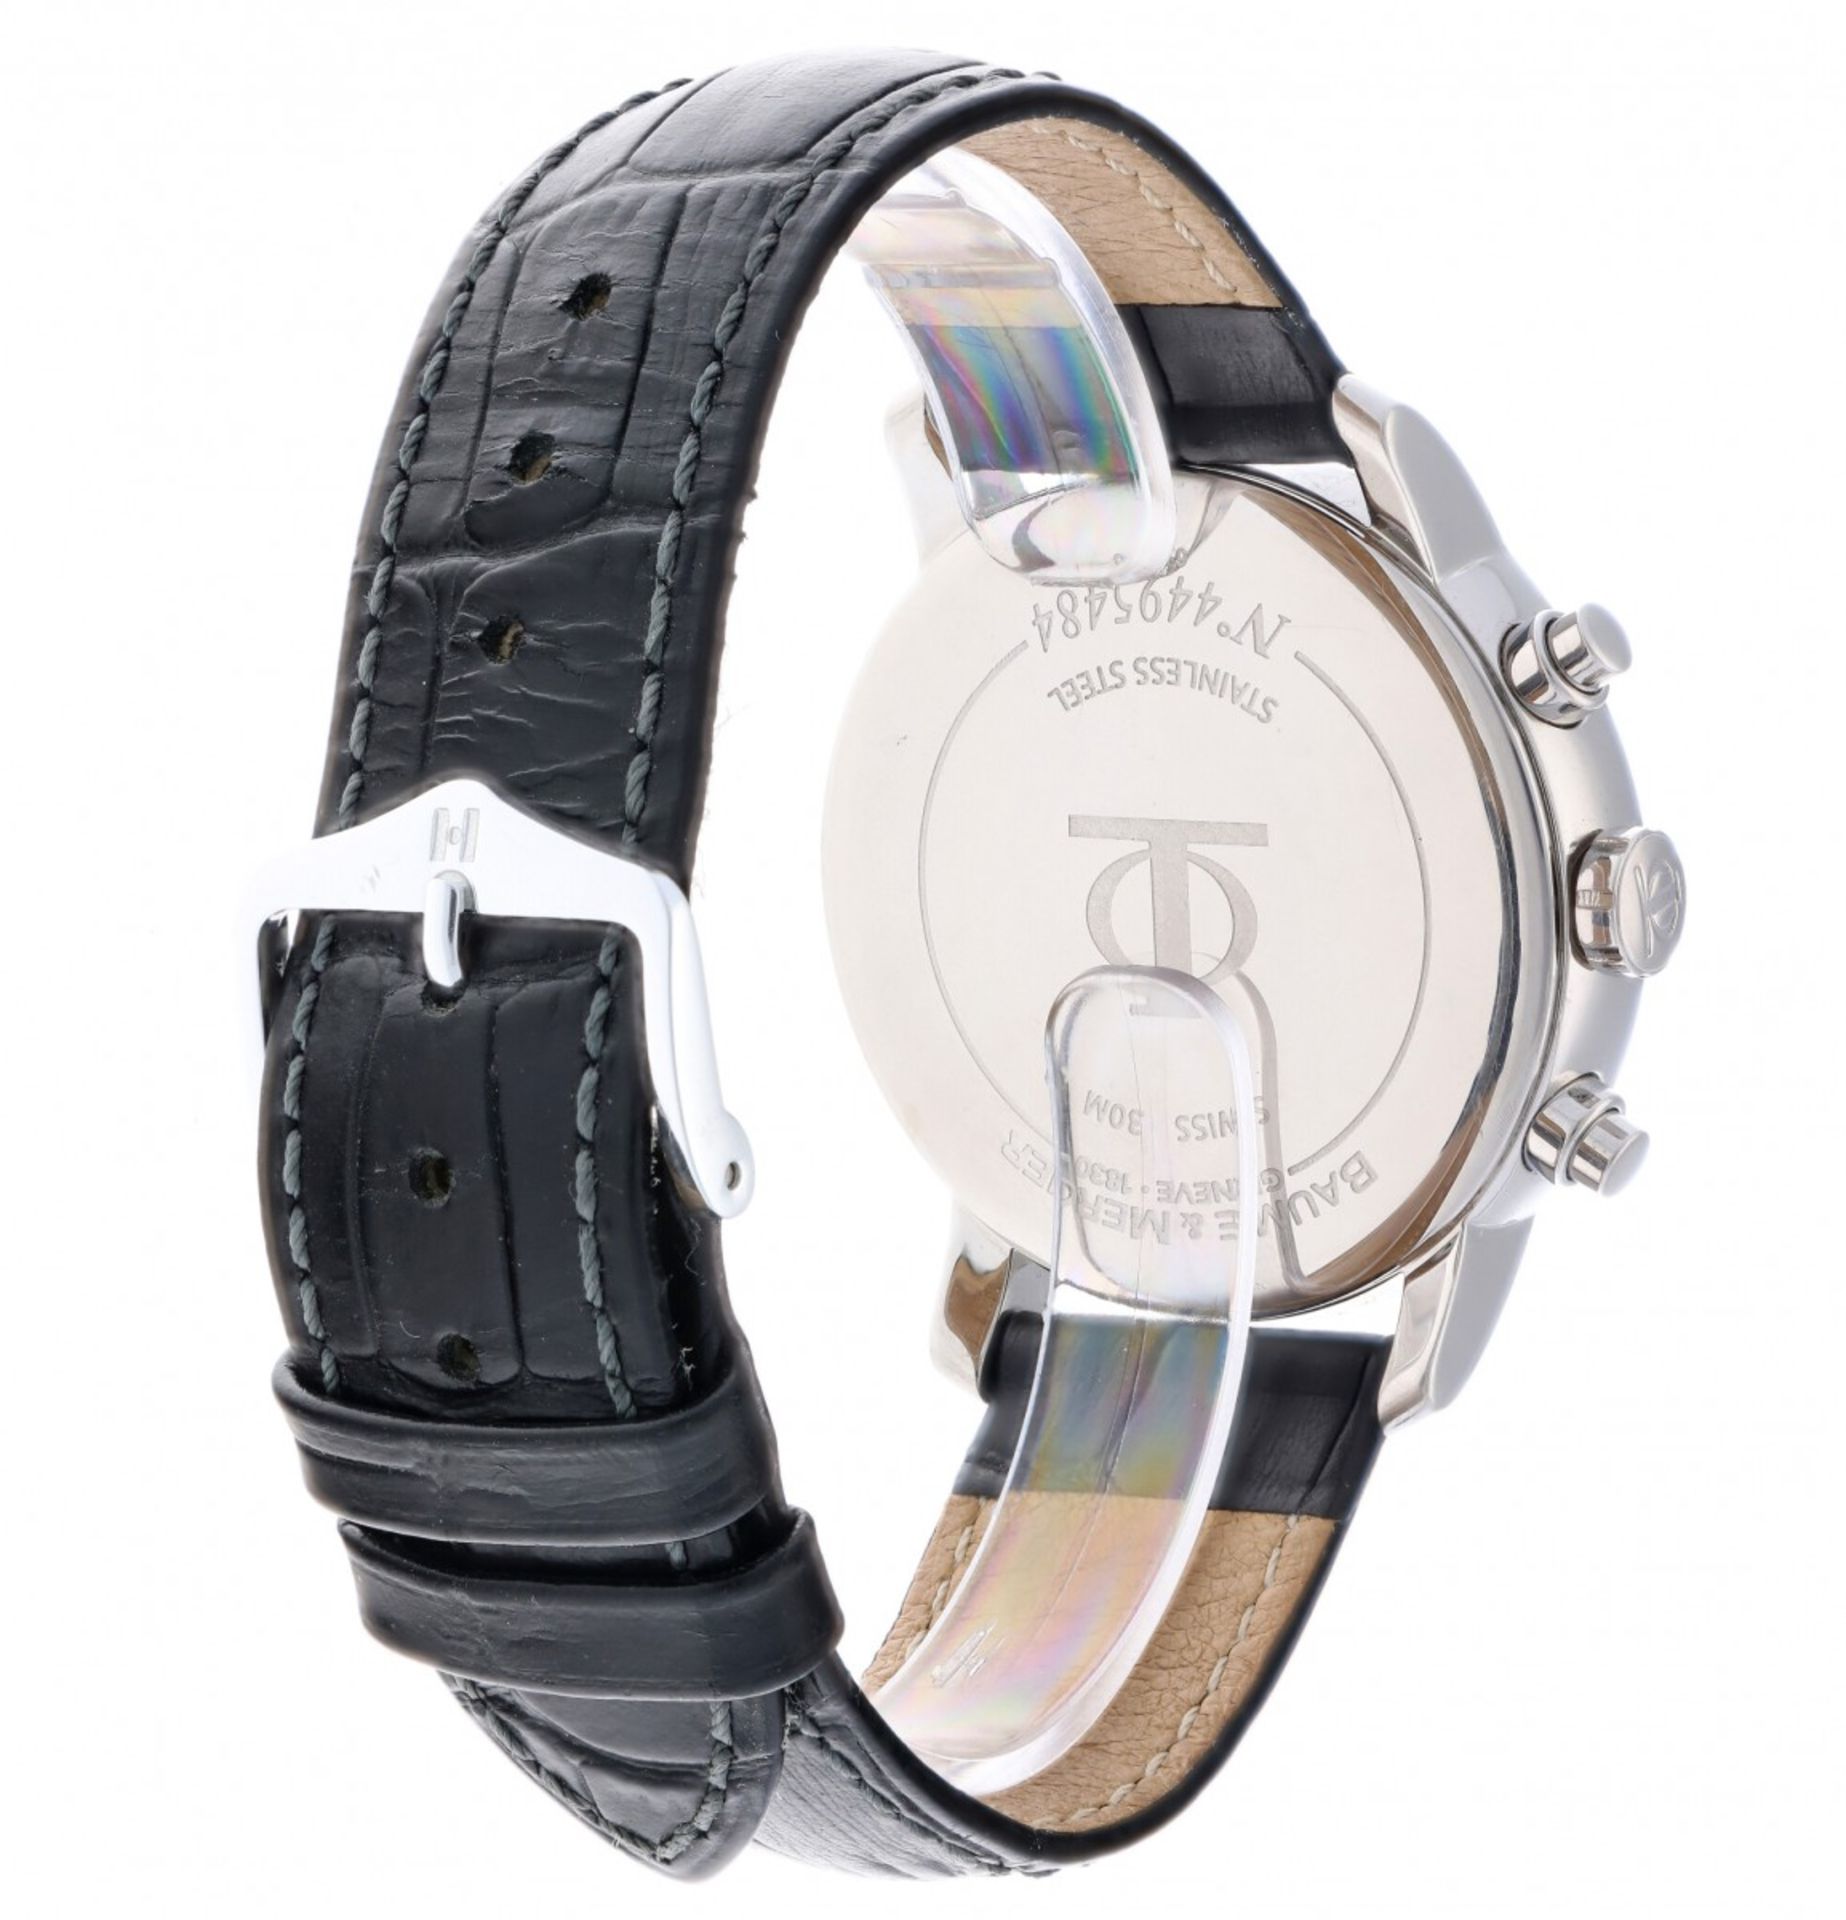 Baume & Mercier Classima Chronograph 65538 - Men's watch - ca. 2011 - Image 3 of 5